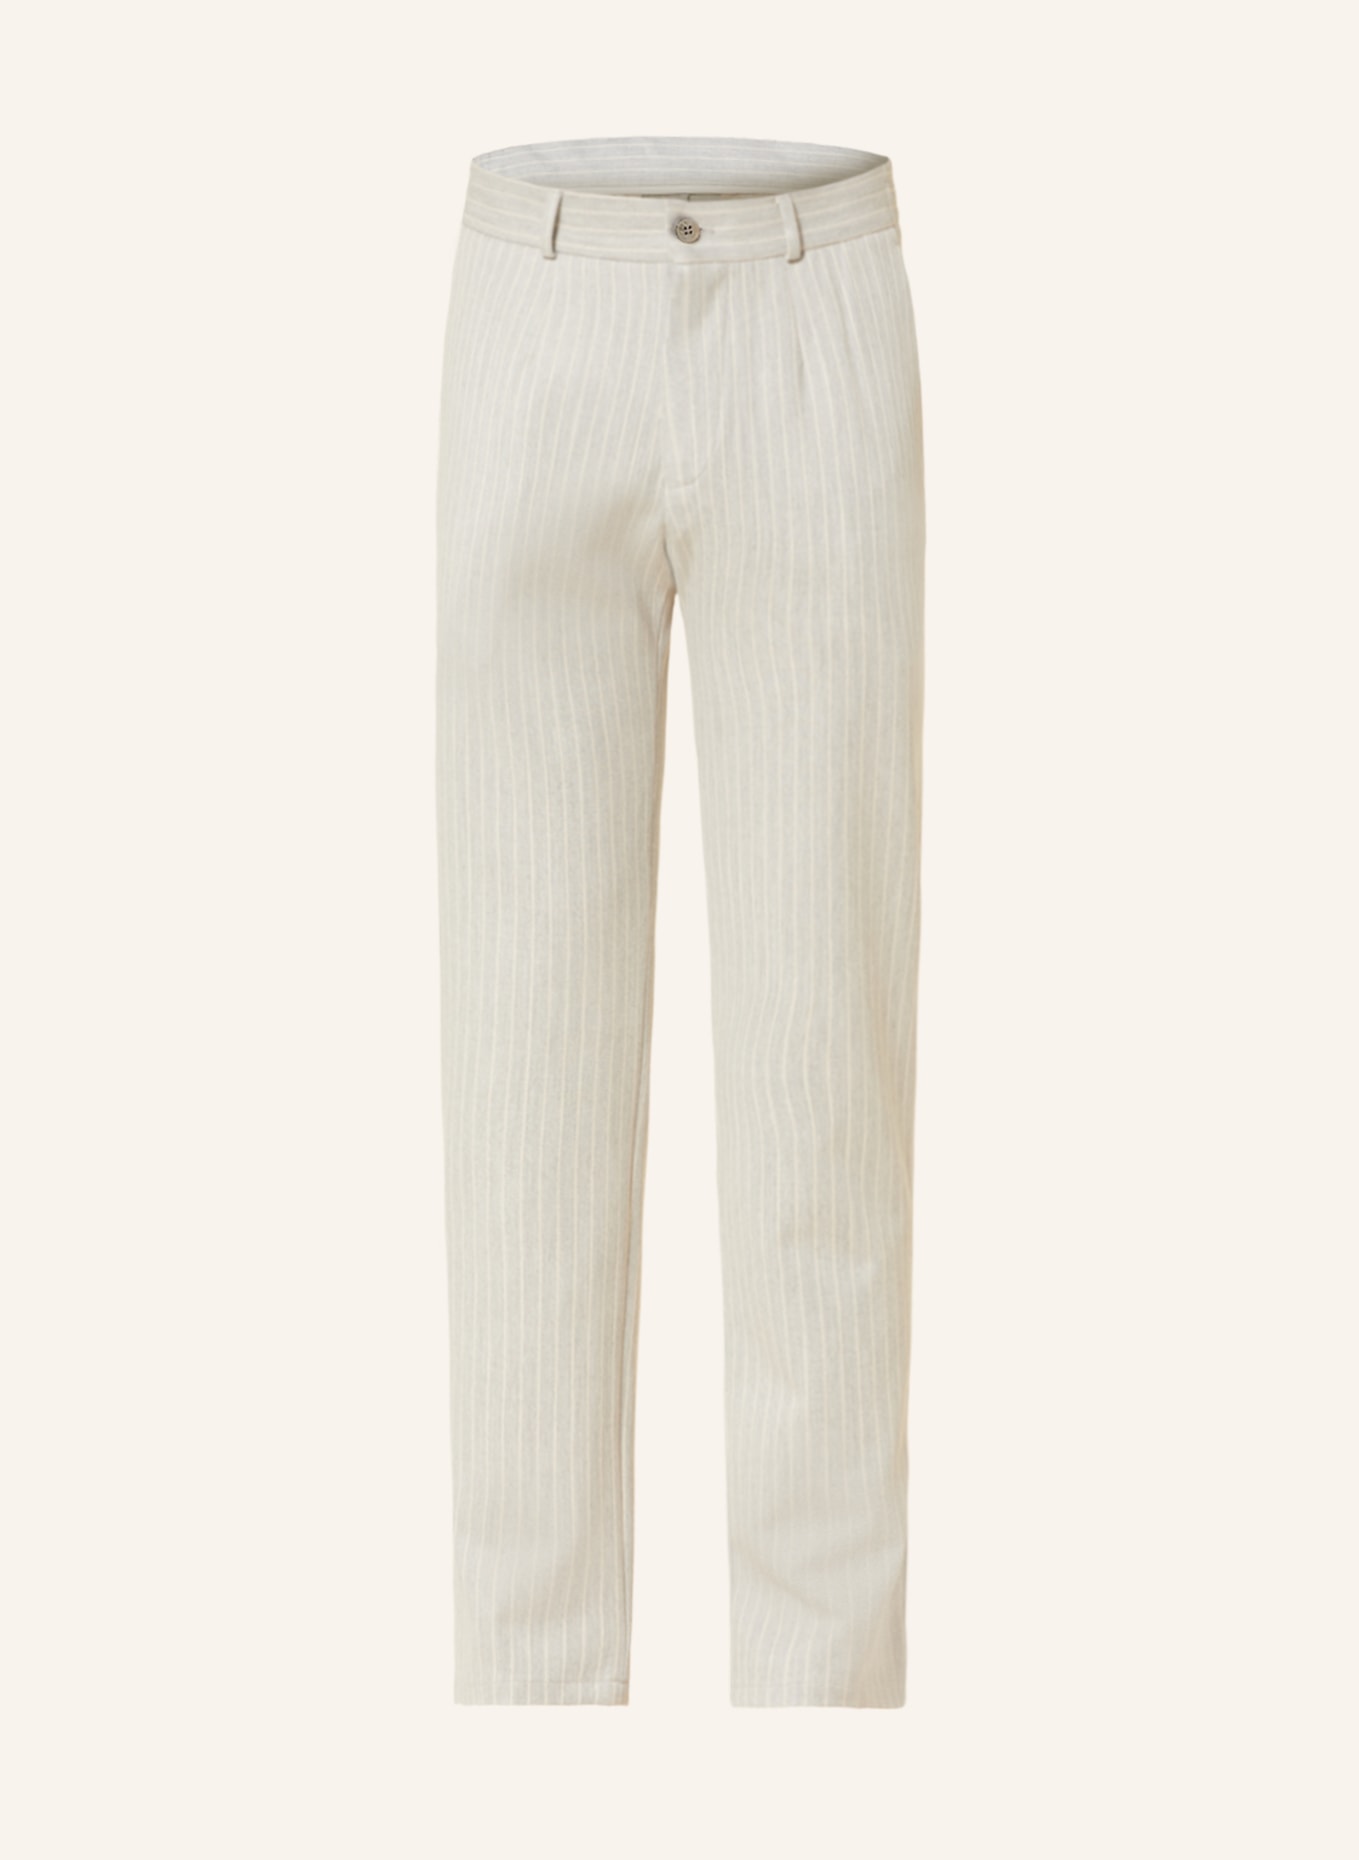 PAUL Anzughose Extra Slim Fit, Farbe: HELLGRAU (Bild 1)